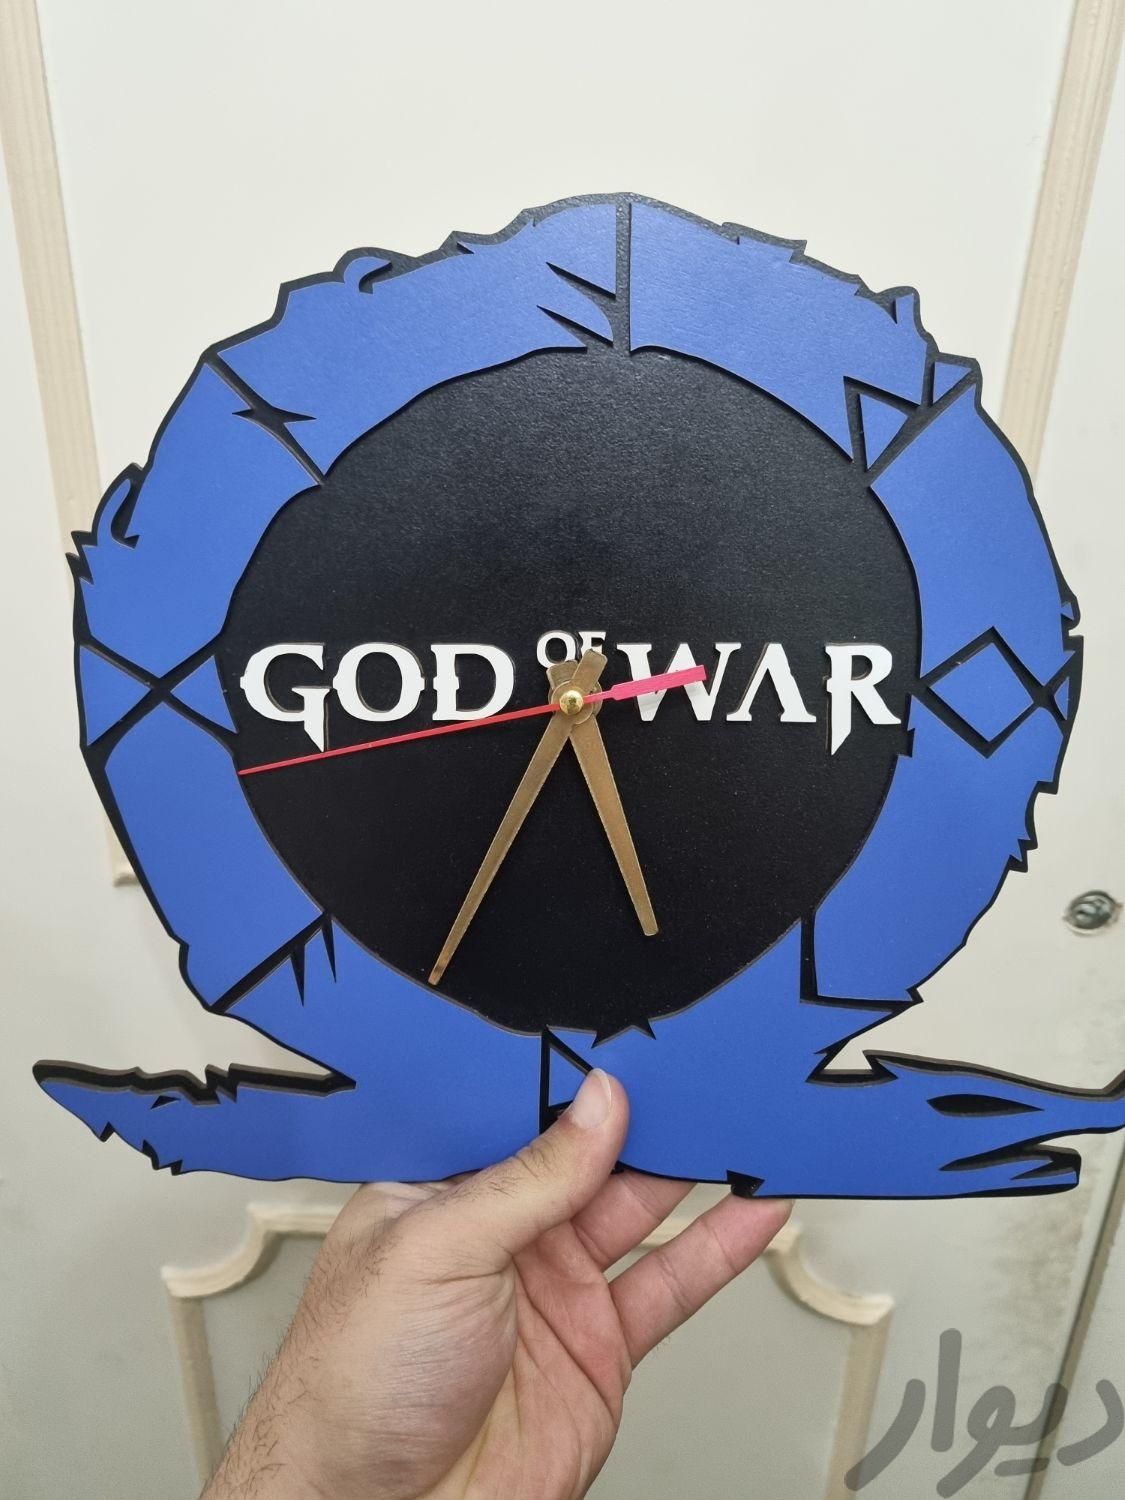 ساعت دیواری طرح گاد اف وار God war خدای جنگ|ساعت دیواری و تزئینی|تهران, پونک|دیوار